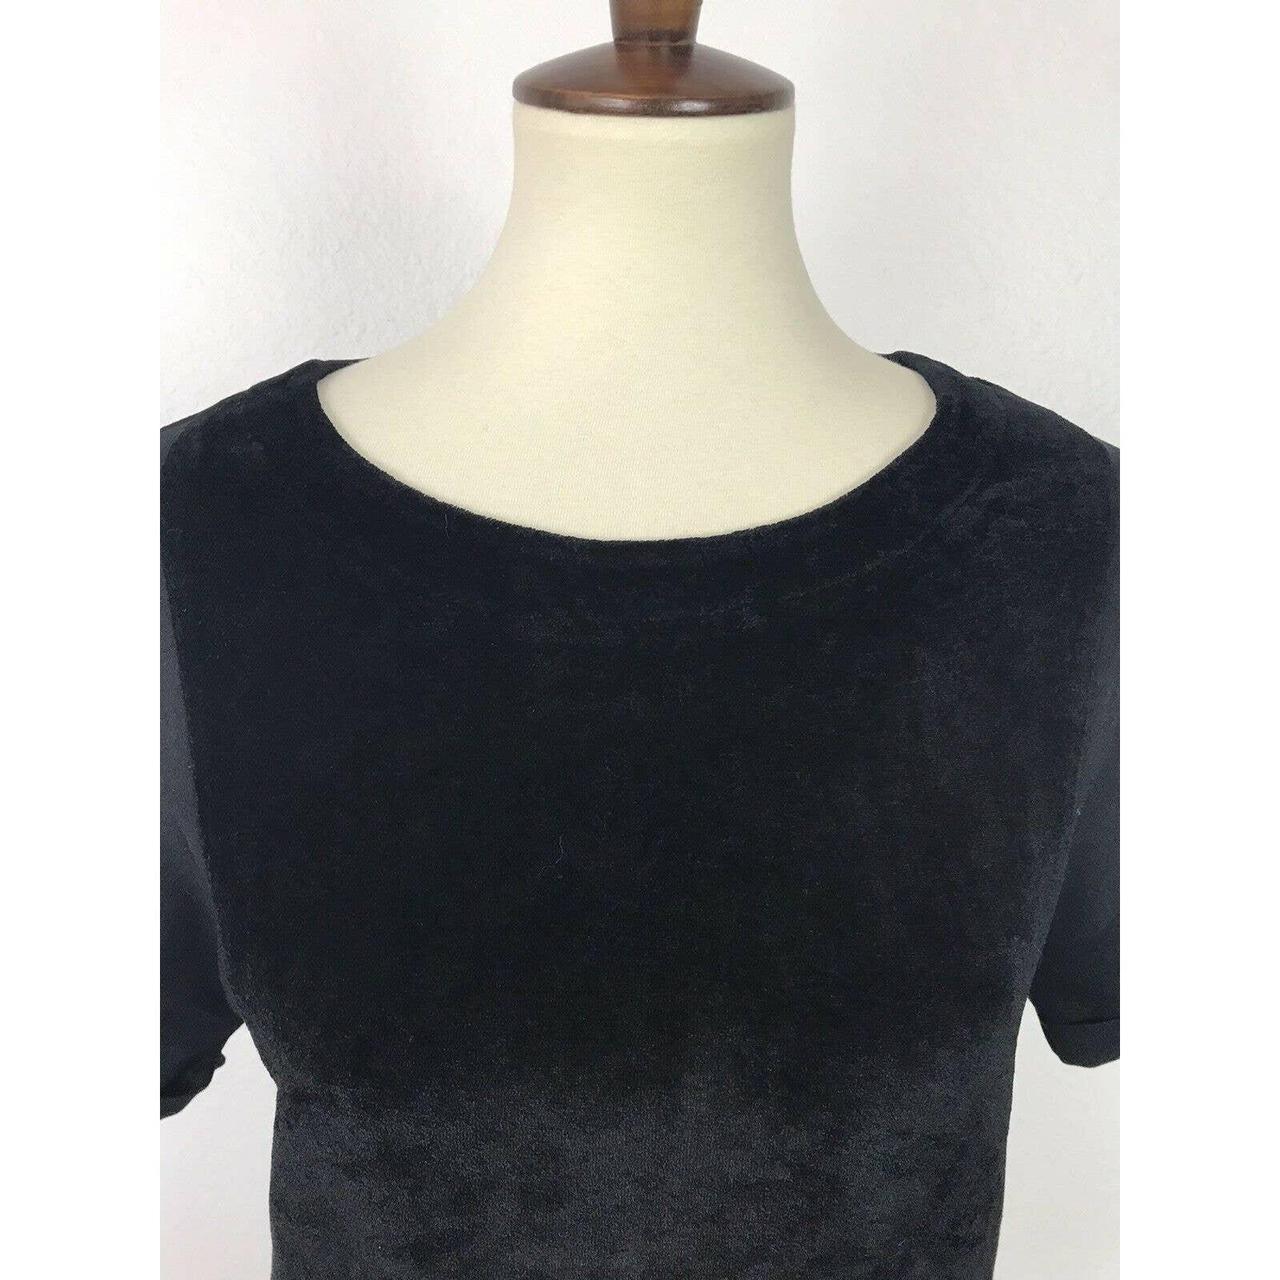 Product Image 2 - Karen Millen Pullover Knit Top

Black

Back Zip

Size